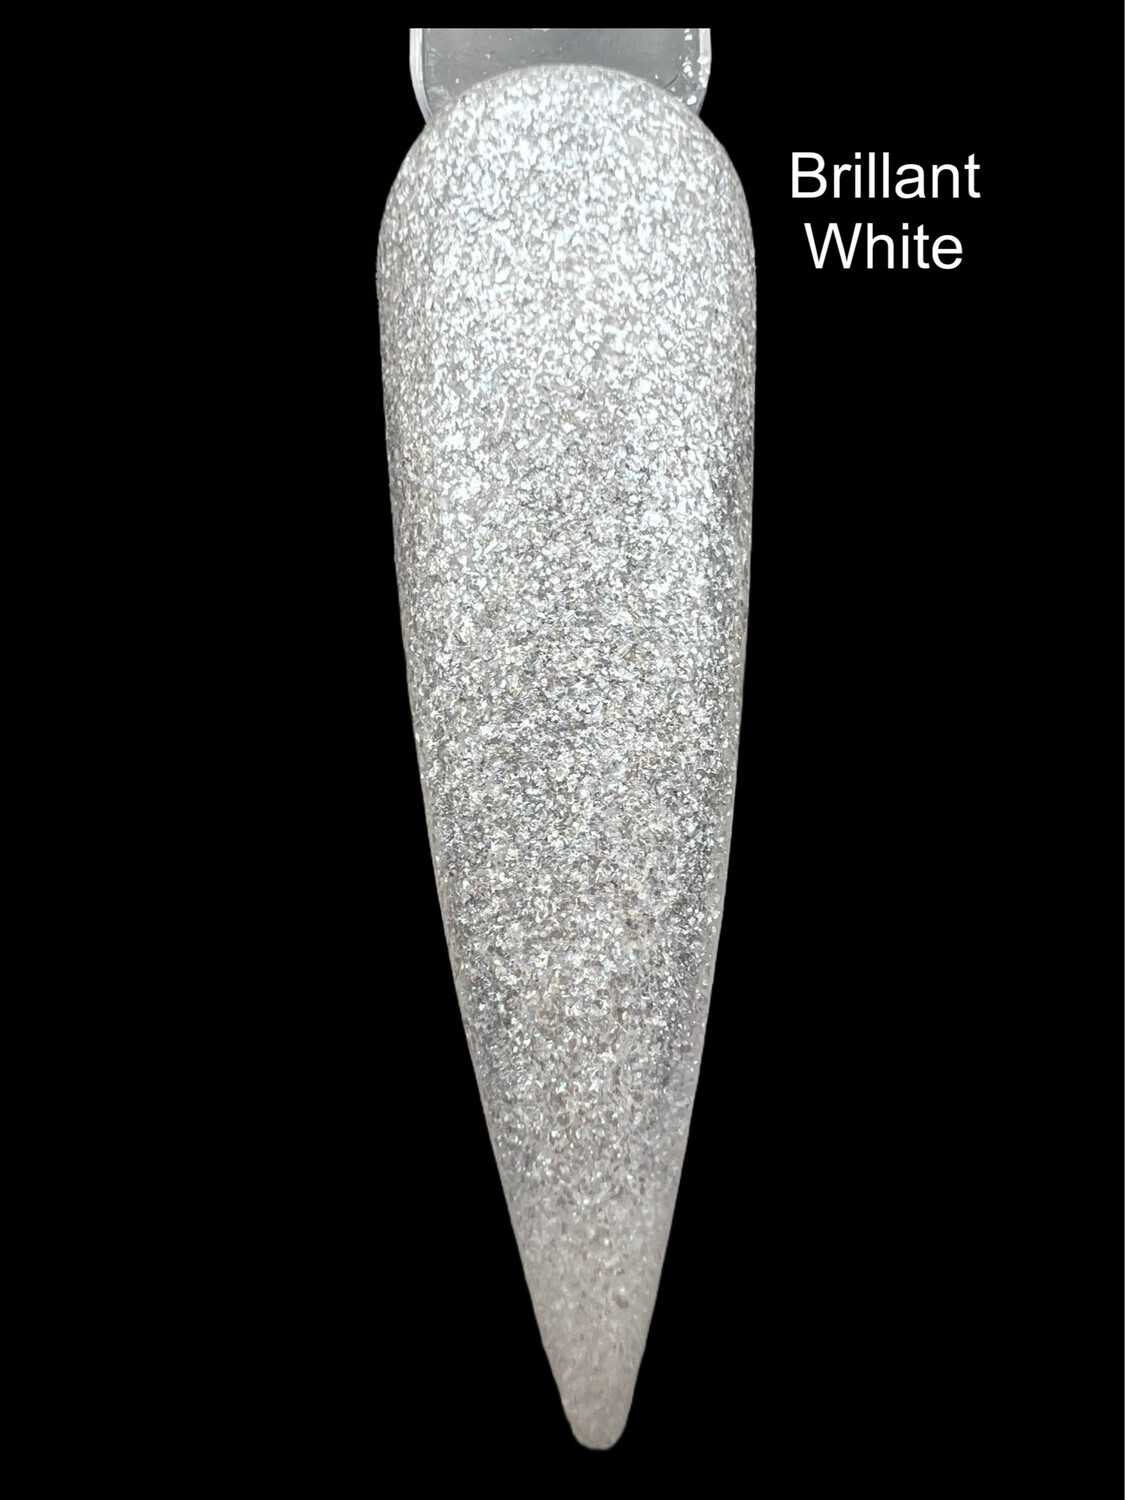 Polymer brillant white